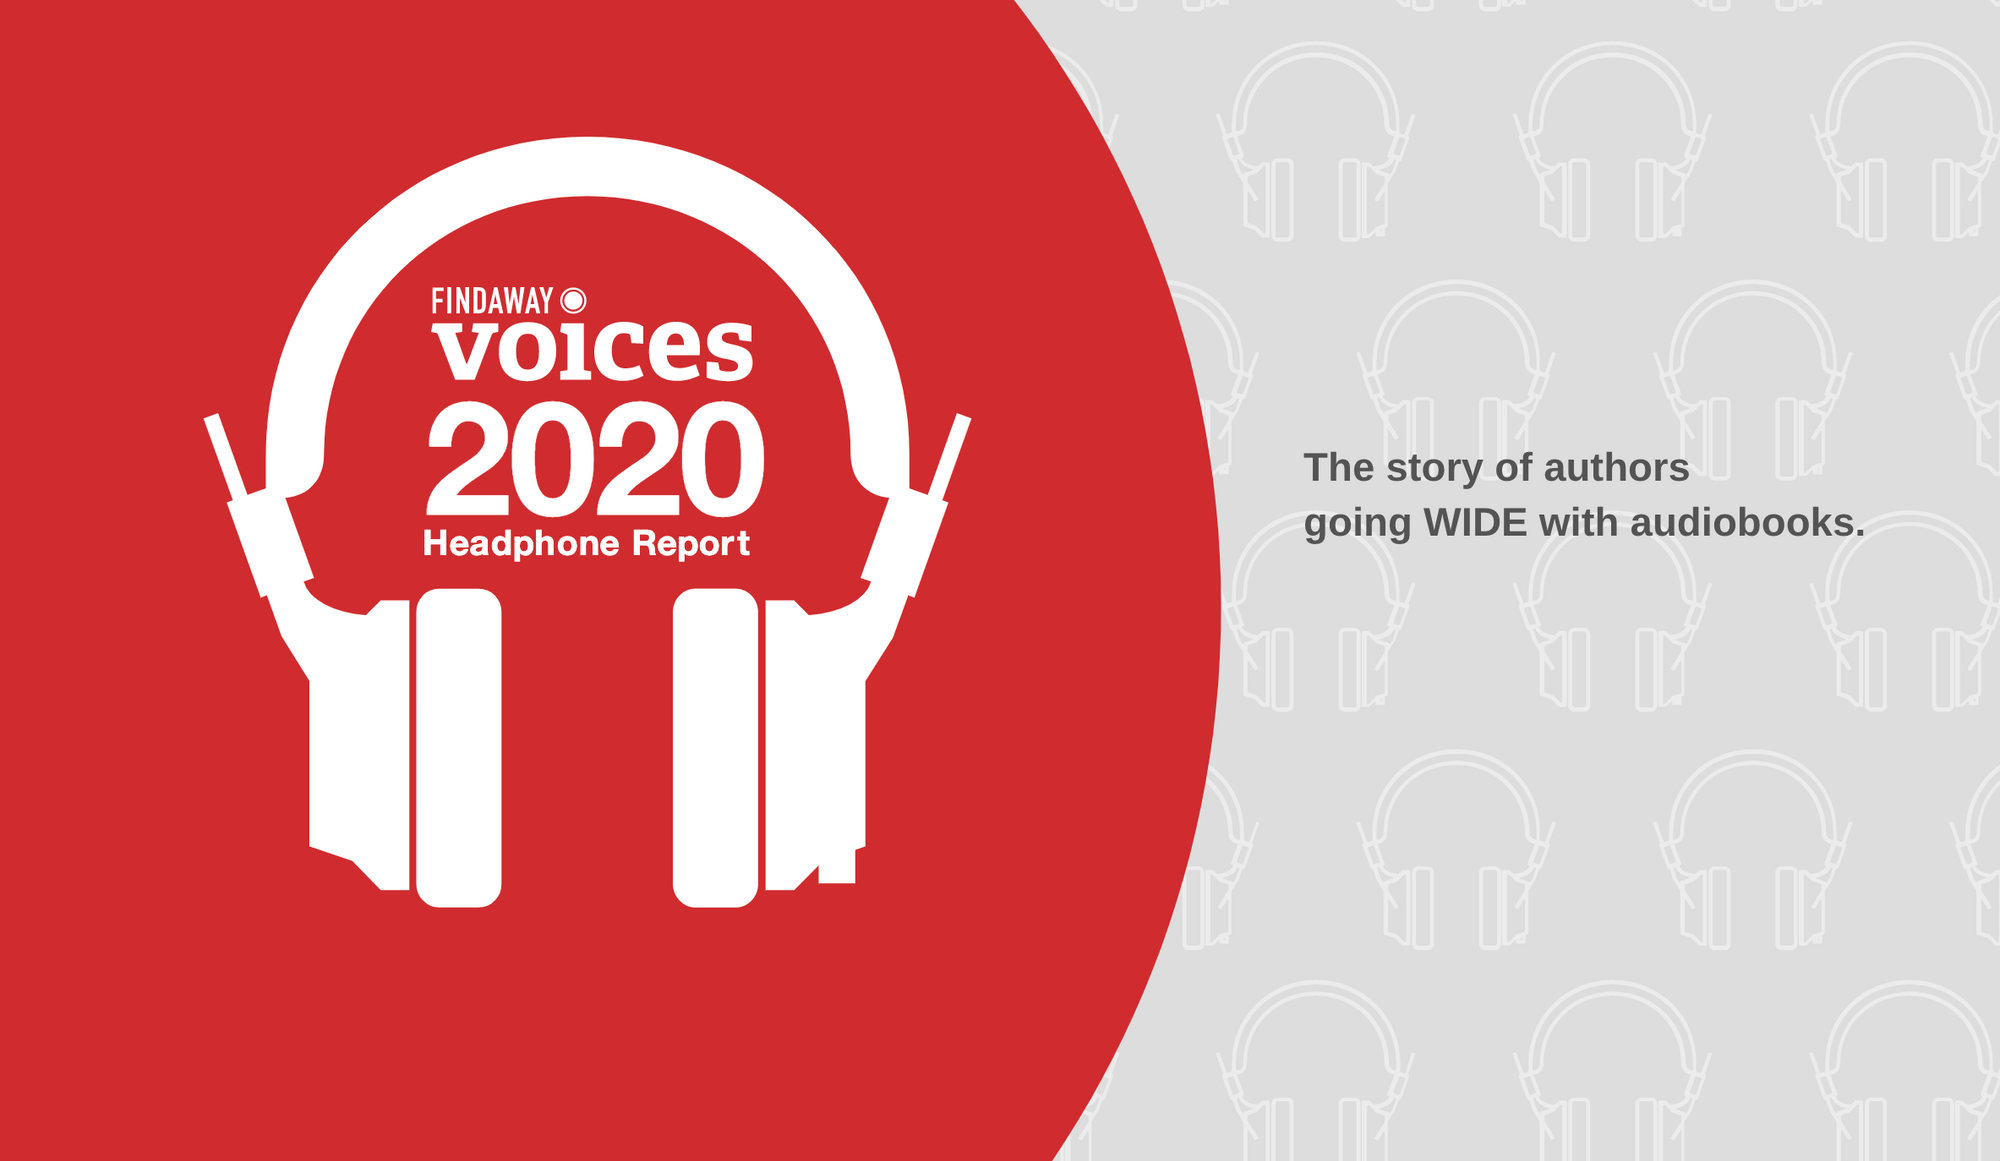 The Headphone Report